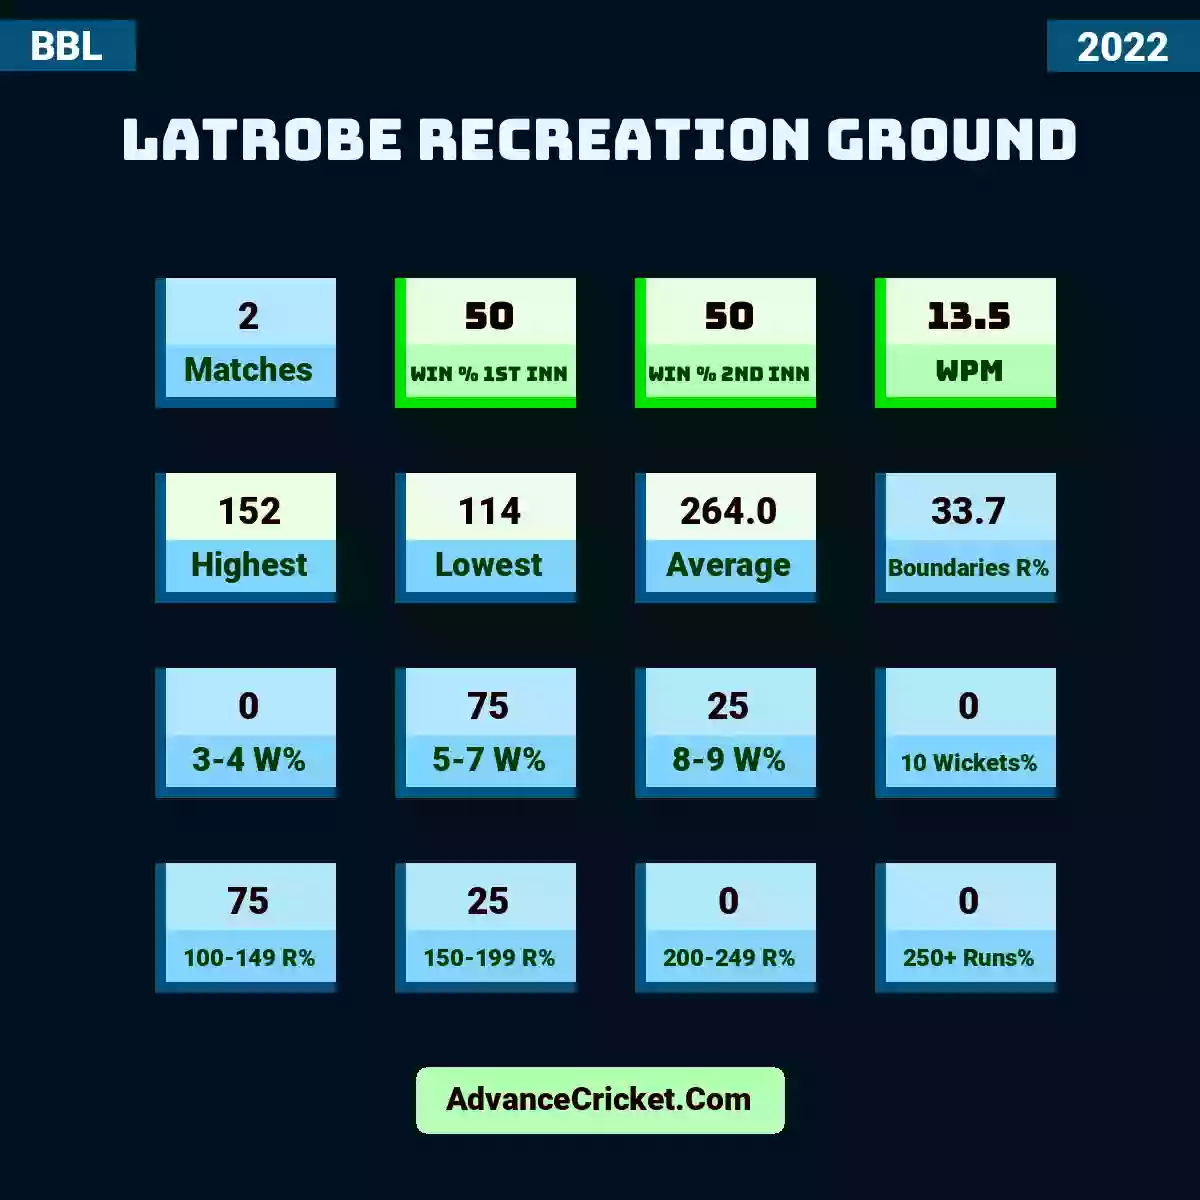 Image showing Latrobe Recreation Ground with Matches: 2, Win % 1st Inn: 50, Win % 2nd Inn: 50, WPM: 13.5, Highest: 152, Lowest: 114, Average: 264.0, Boundaries R%: 33.7, 3-4 W%: 0, 5-7 W%: 75, 8-9 W%: 25, 10 Wickets%: 0, 100-149 R%: 75, 150-199 R%: 25, 200-249 R%: 0, 250+ Runs%: 0.